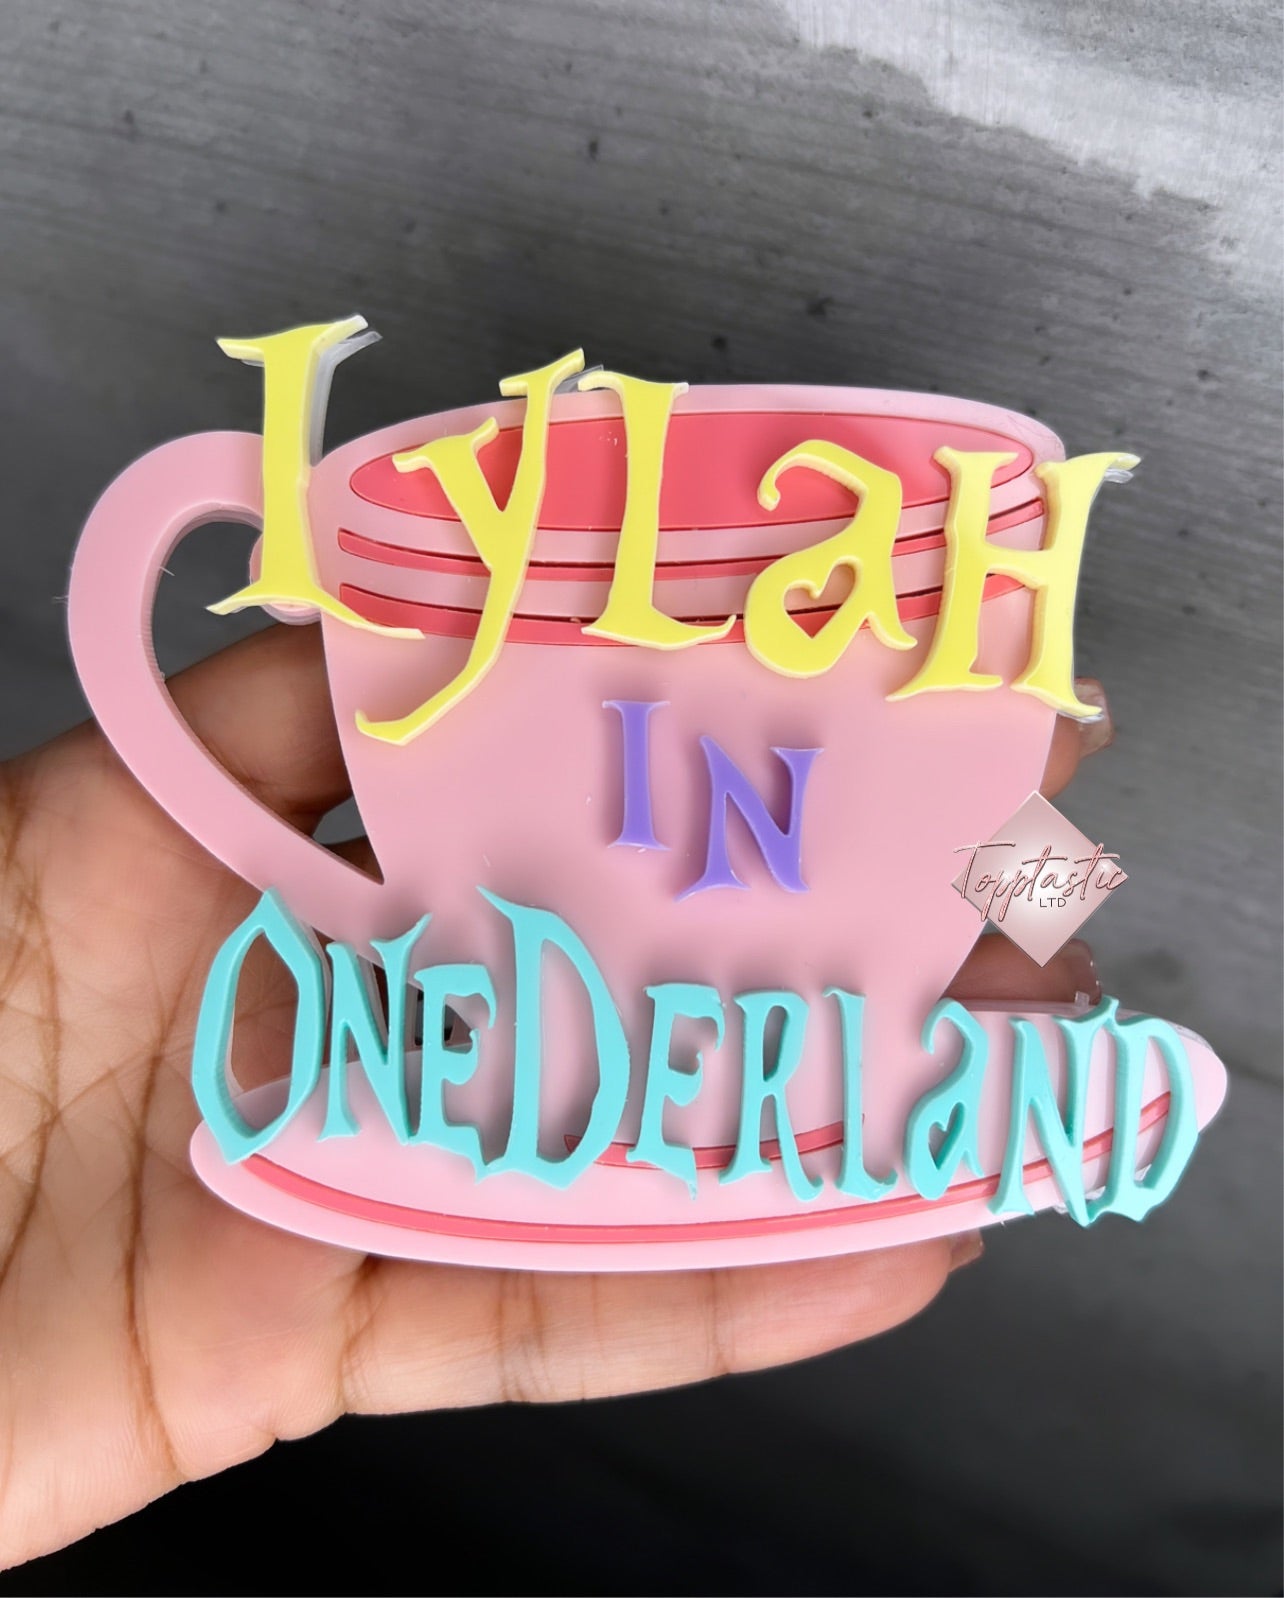 Alice in wonderland/ Tea cup charm